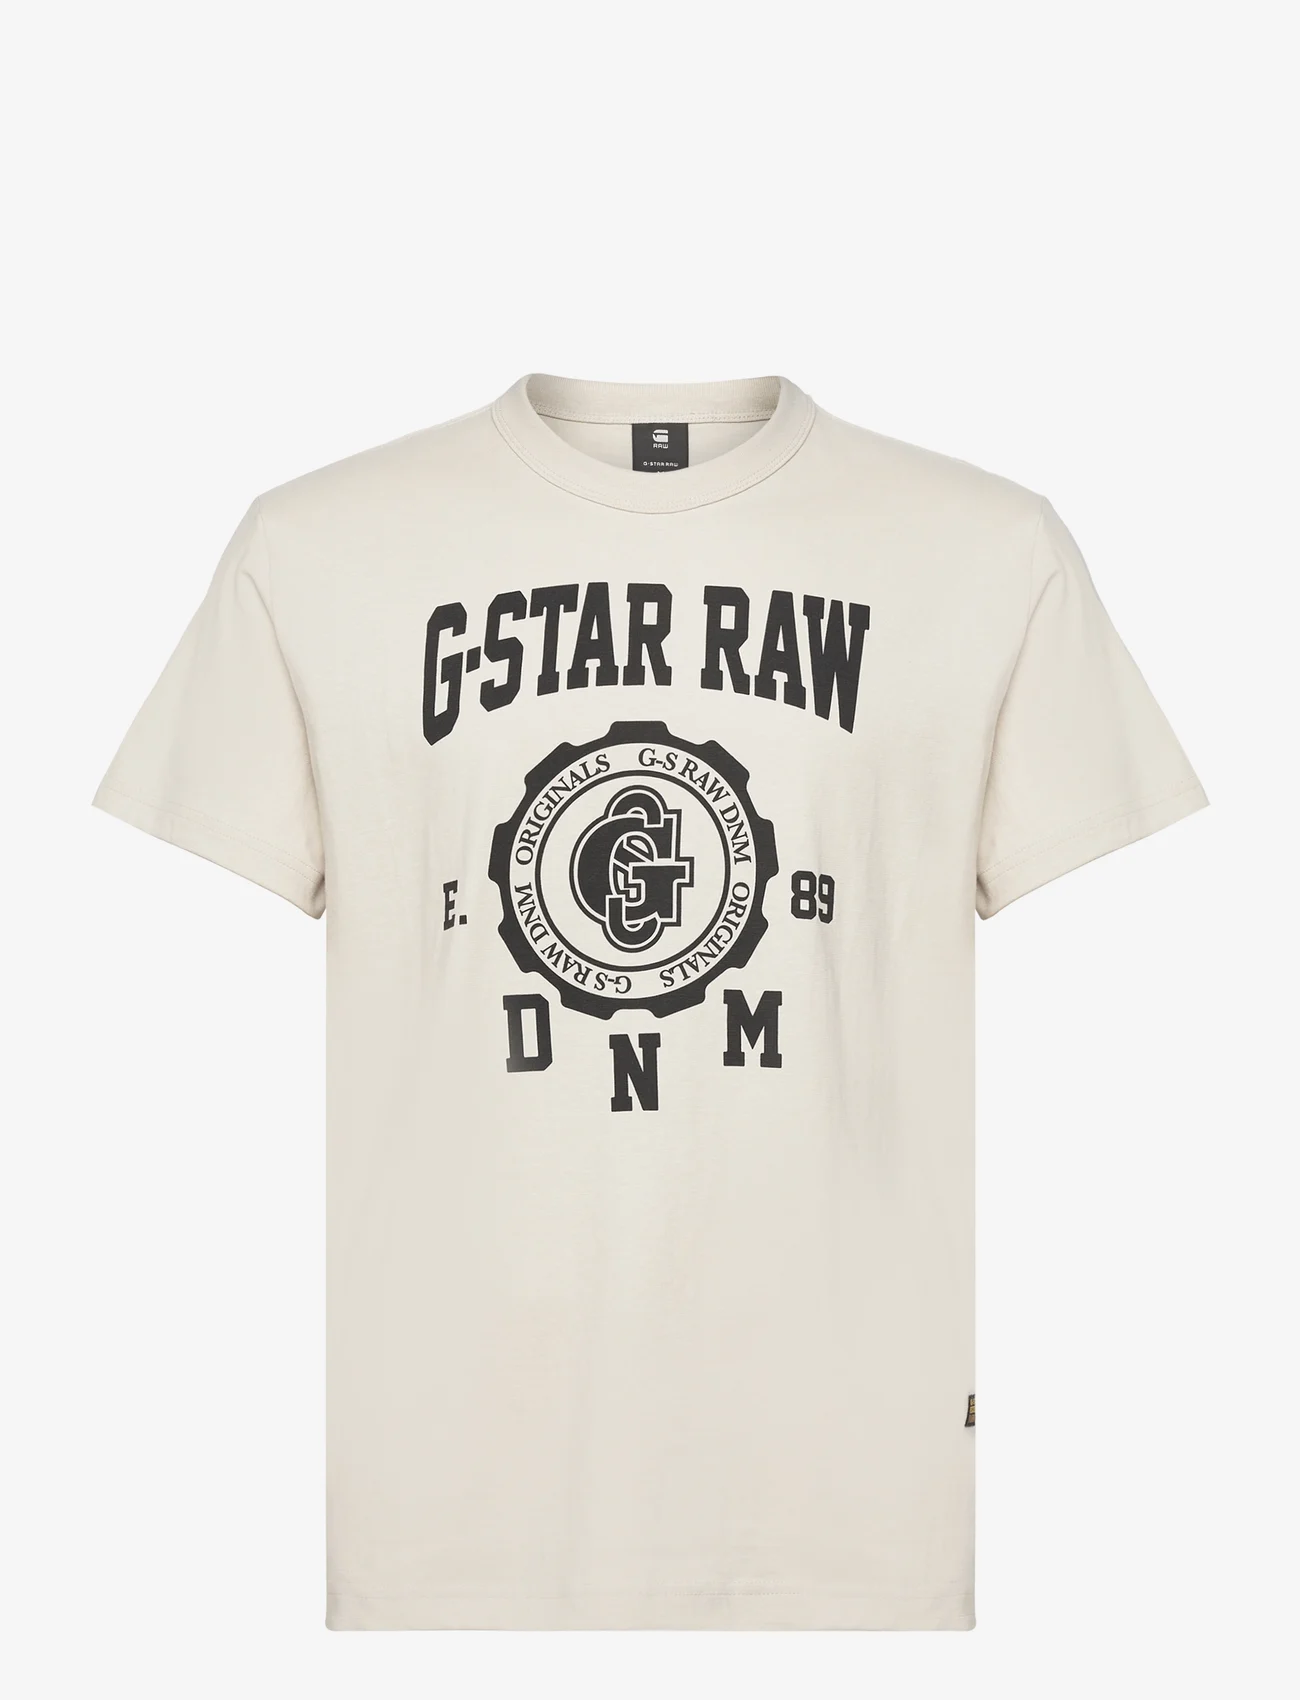 G-Star RAW - Collegic r t - short-sleeved t-shirts - whitebait - 0